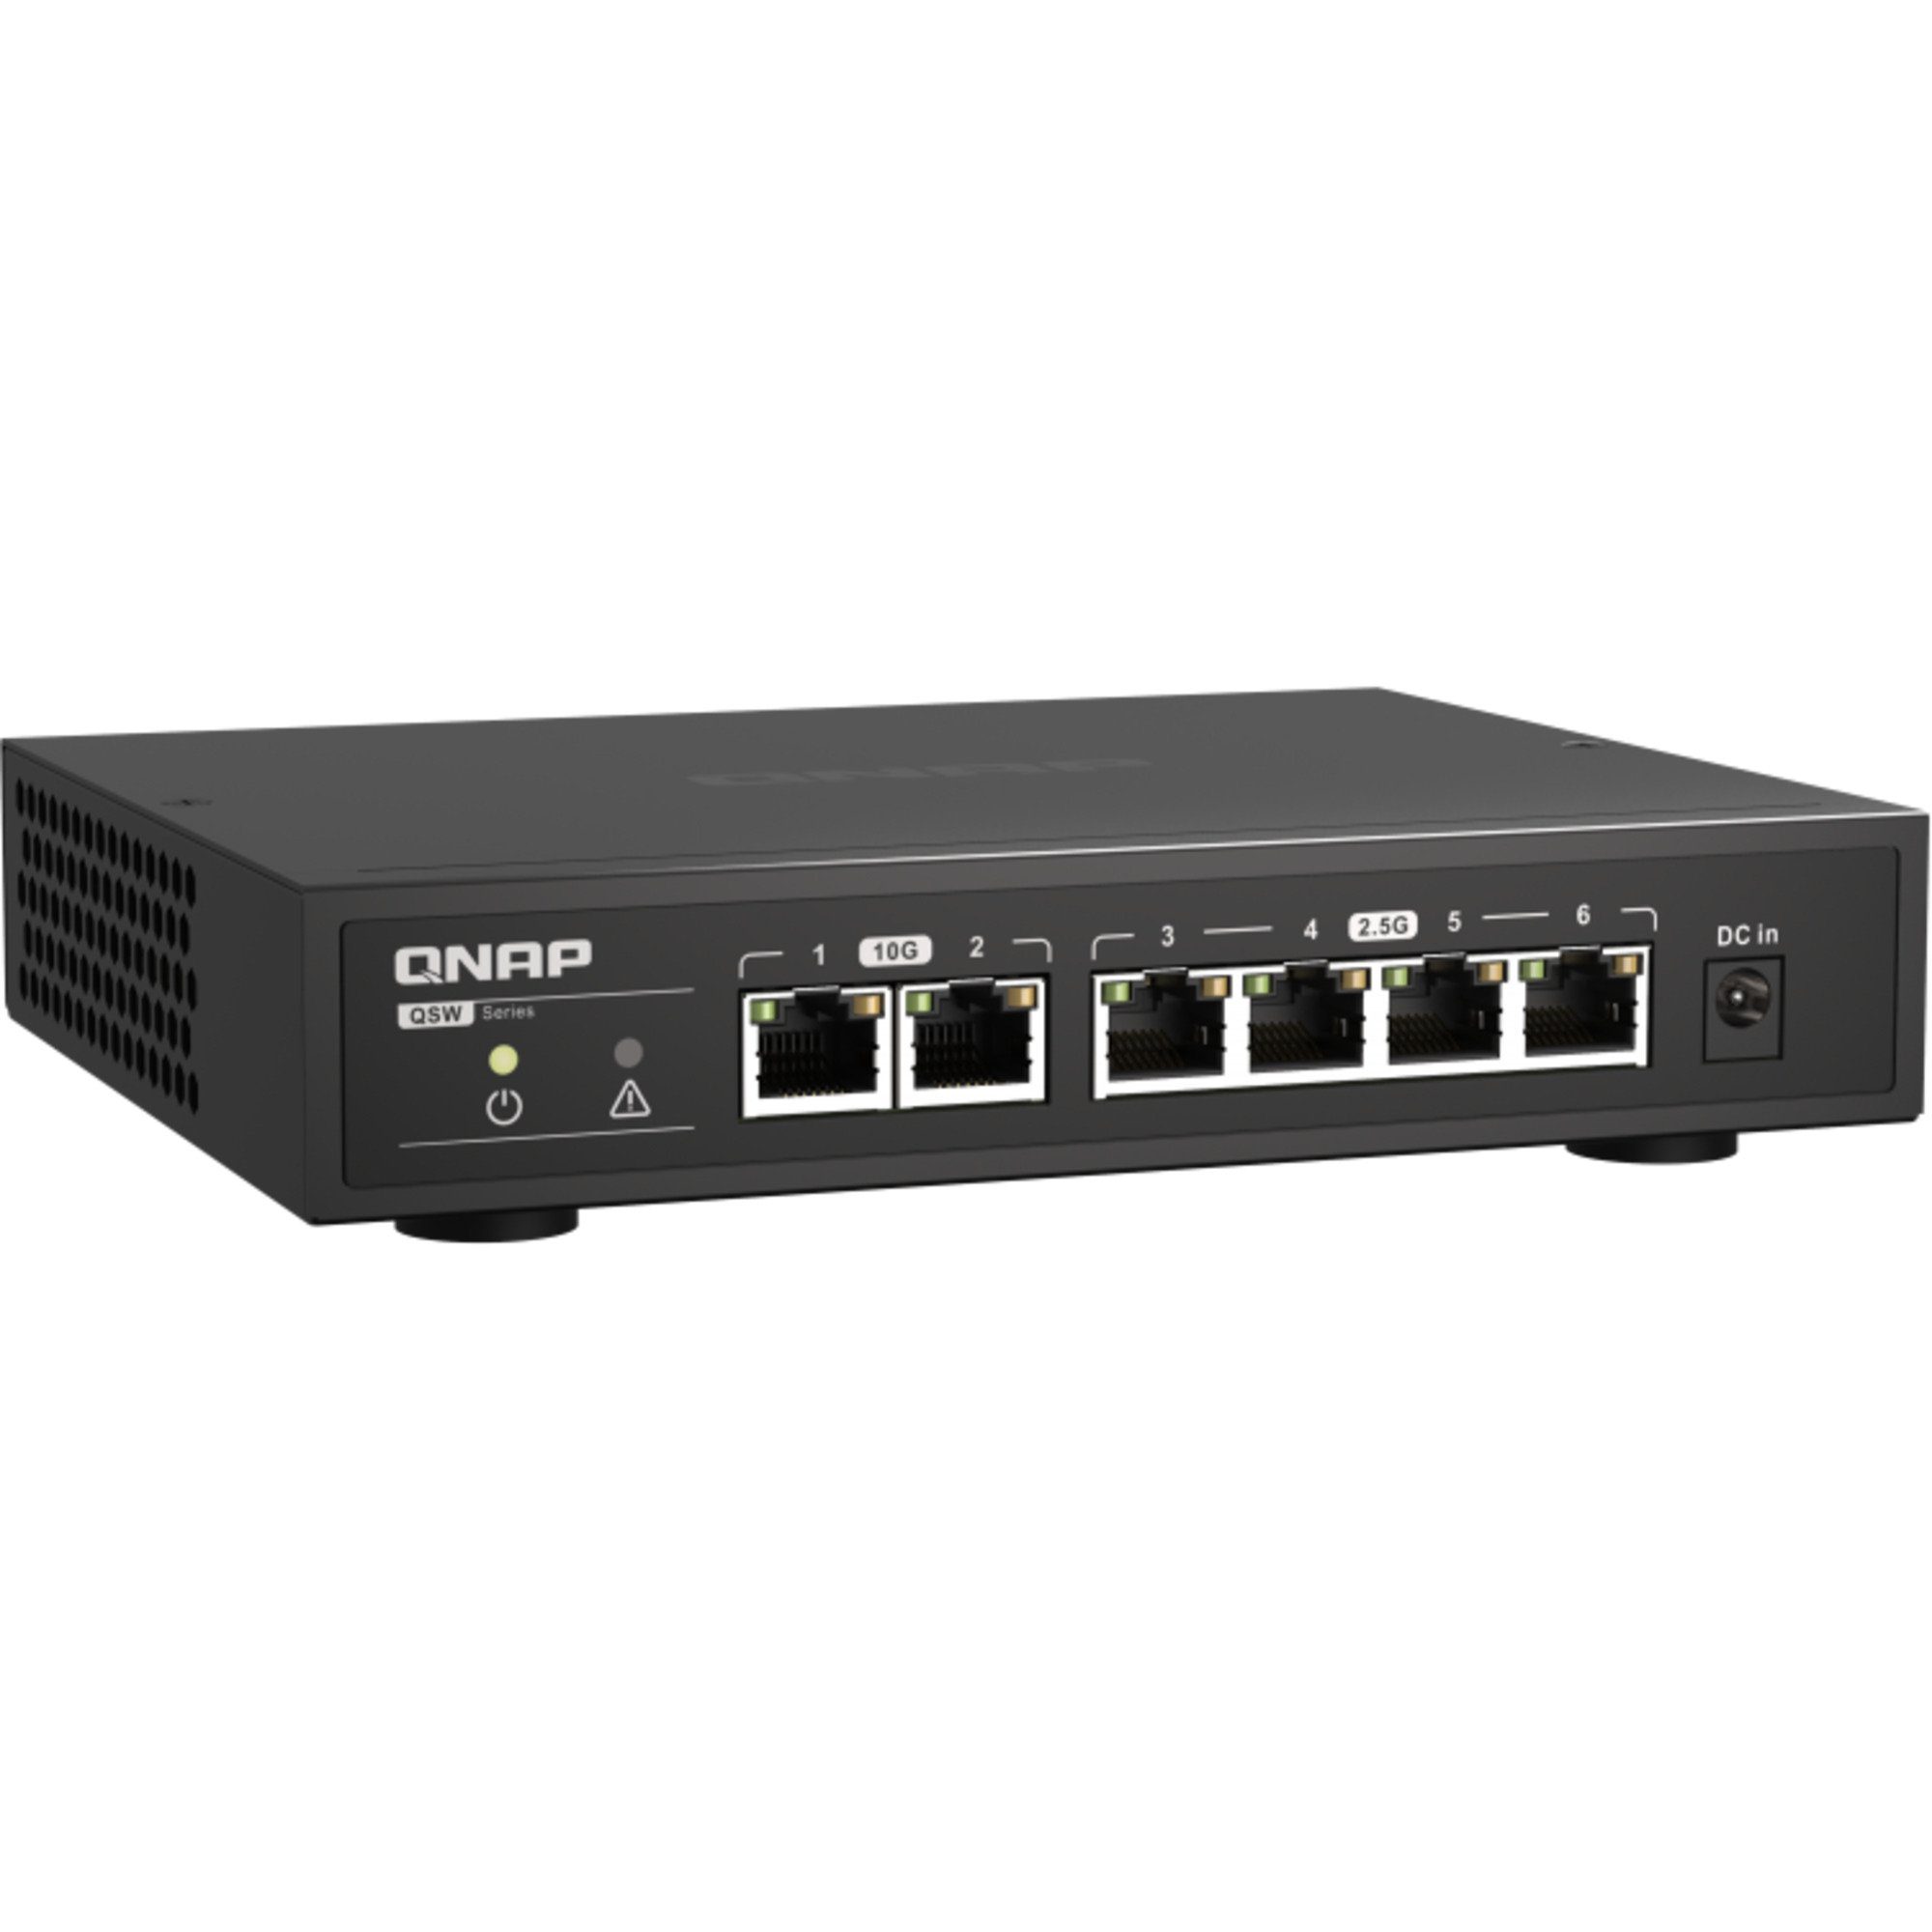 QNAP QNAP QSW-2104-2T, Switch Netzwerk-Switch